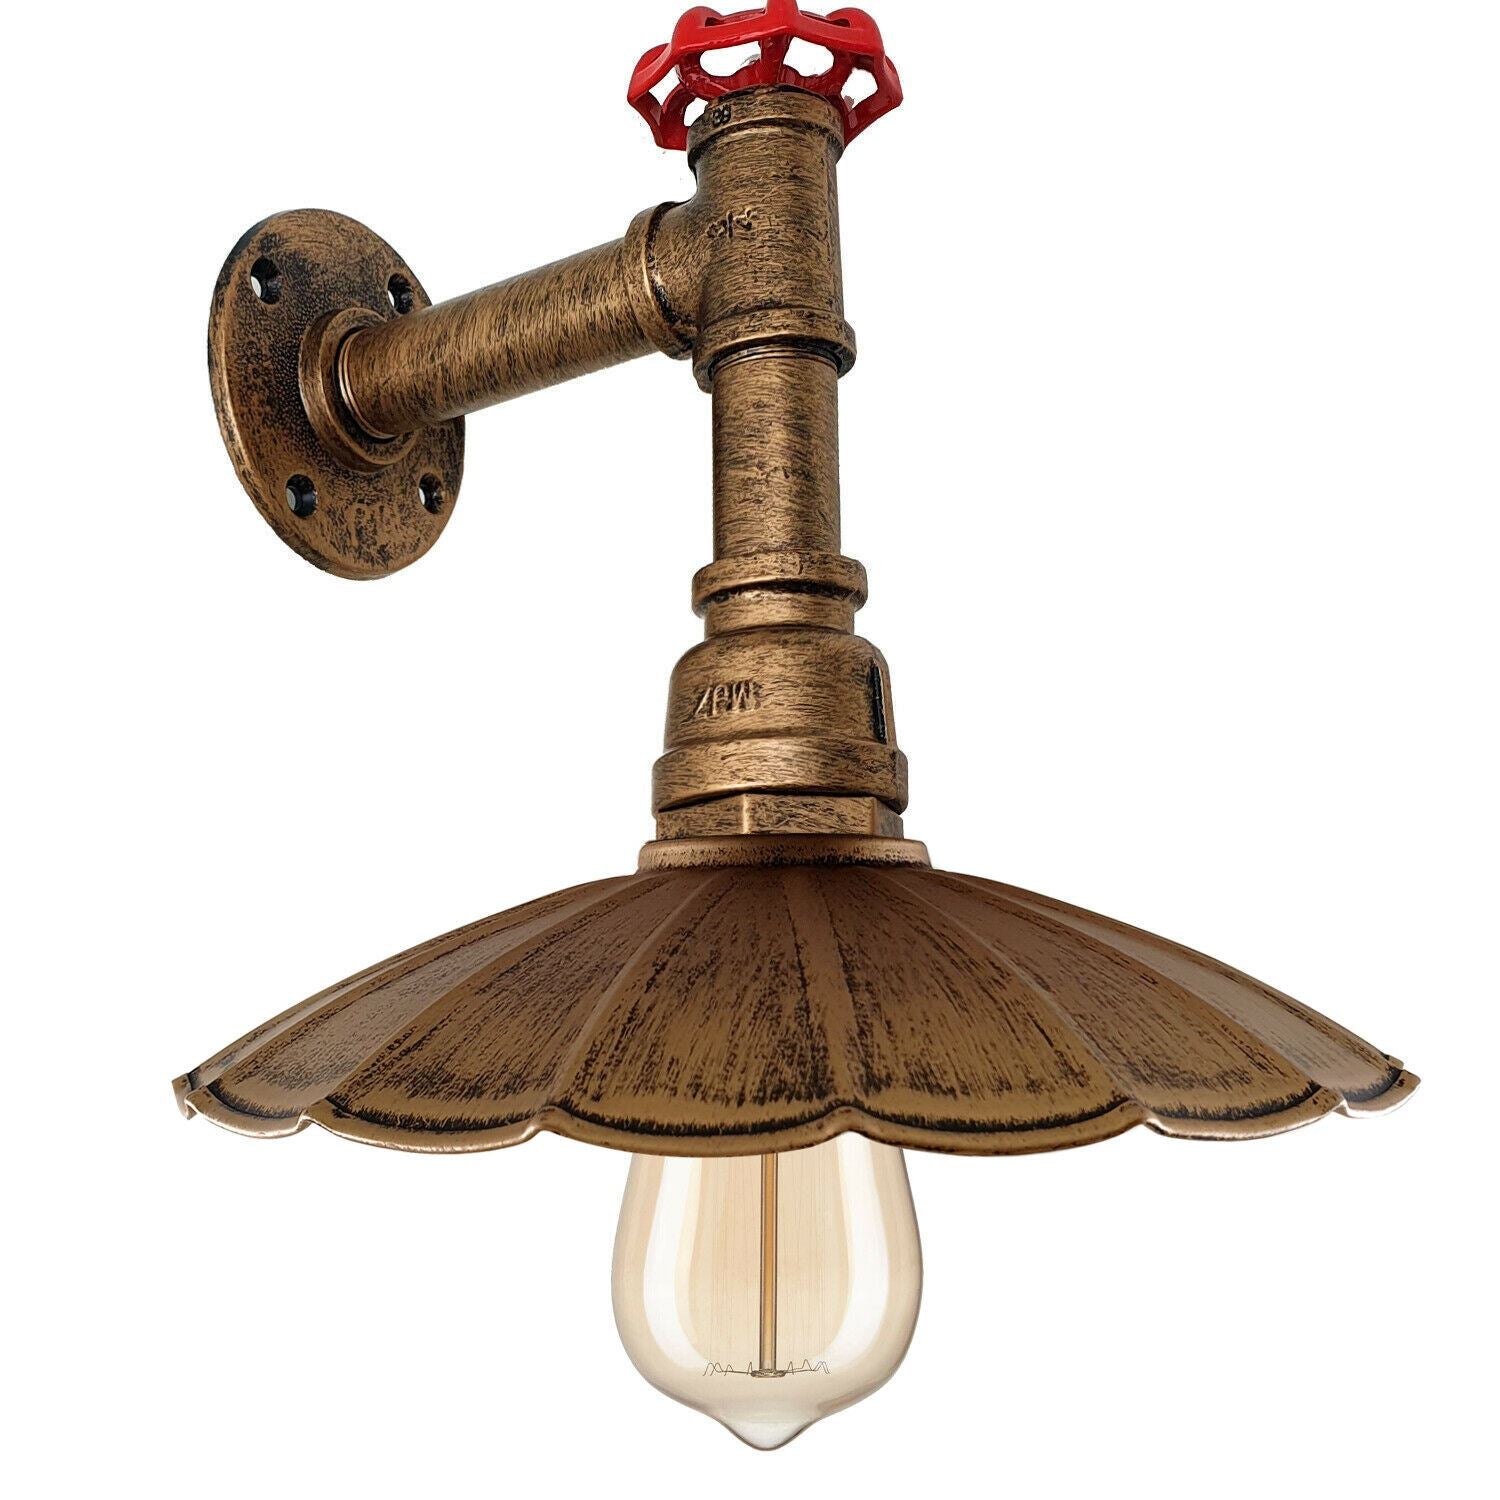 Vintage Retro Industrial Wall Pipe Light Fittings Indoor Sconce Metal Lamp Umbrella Shape Shade for Basement, Bedroom, Home Office, Study room~1250 - LEDSone UK Ltd